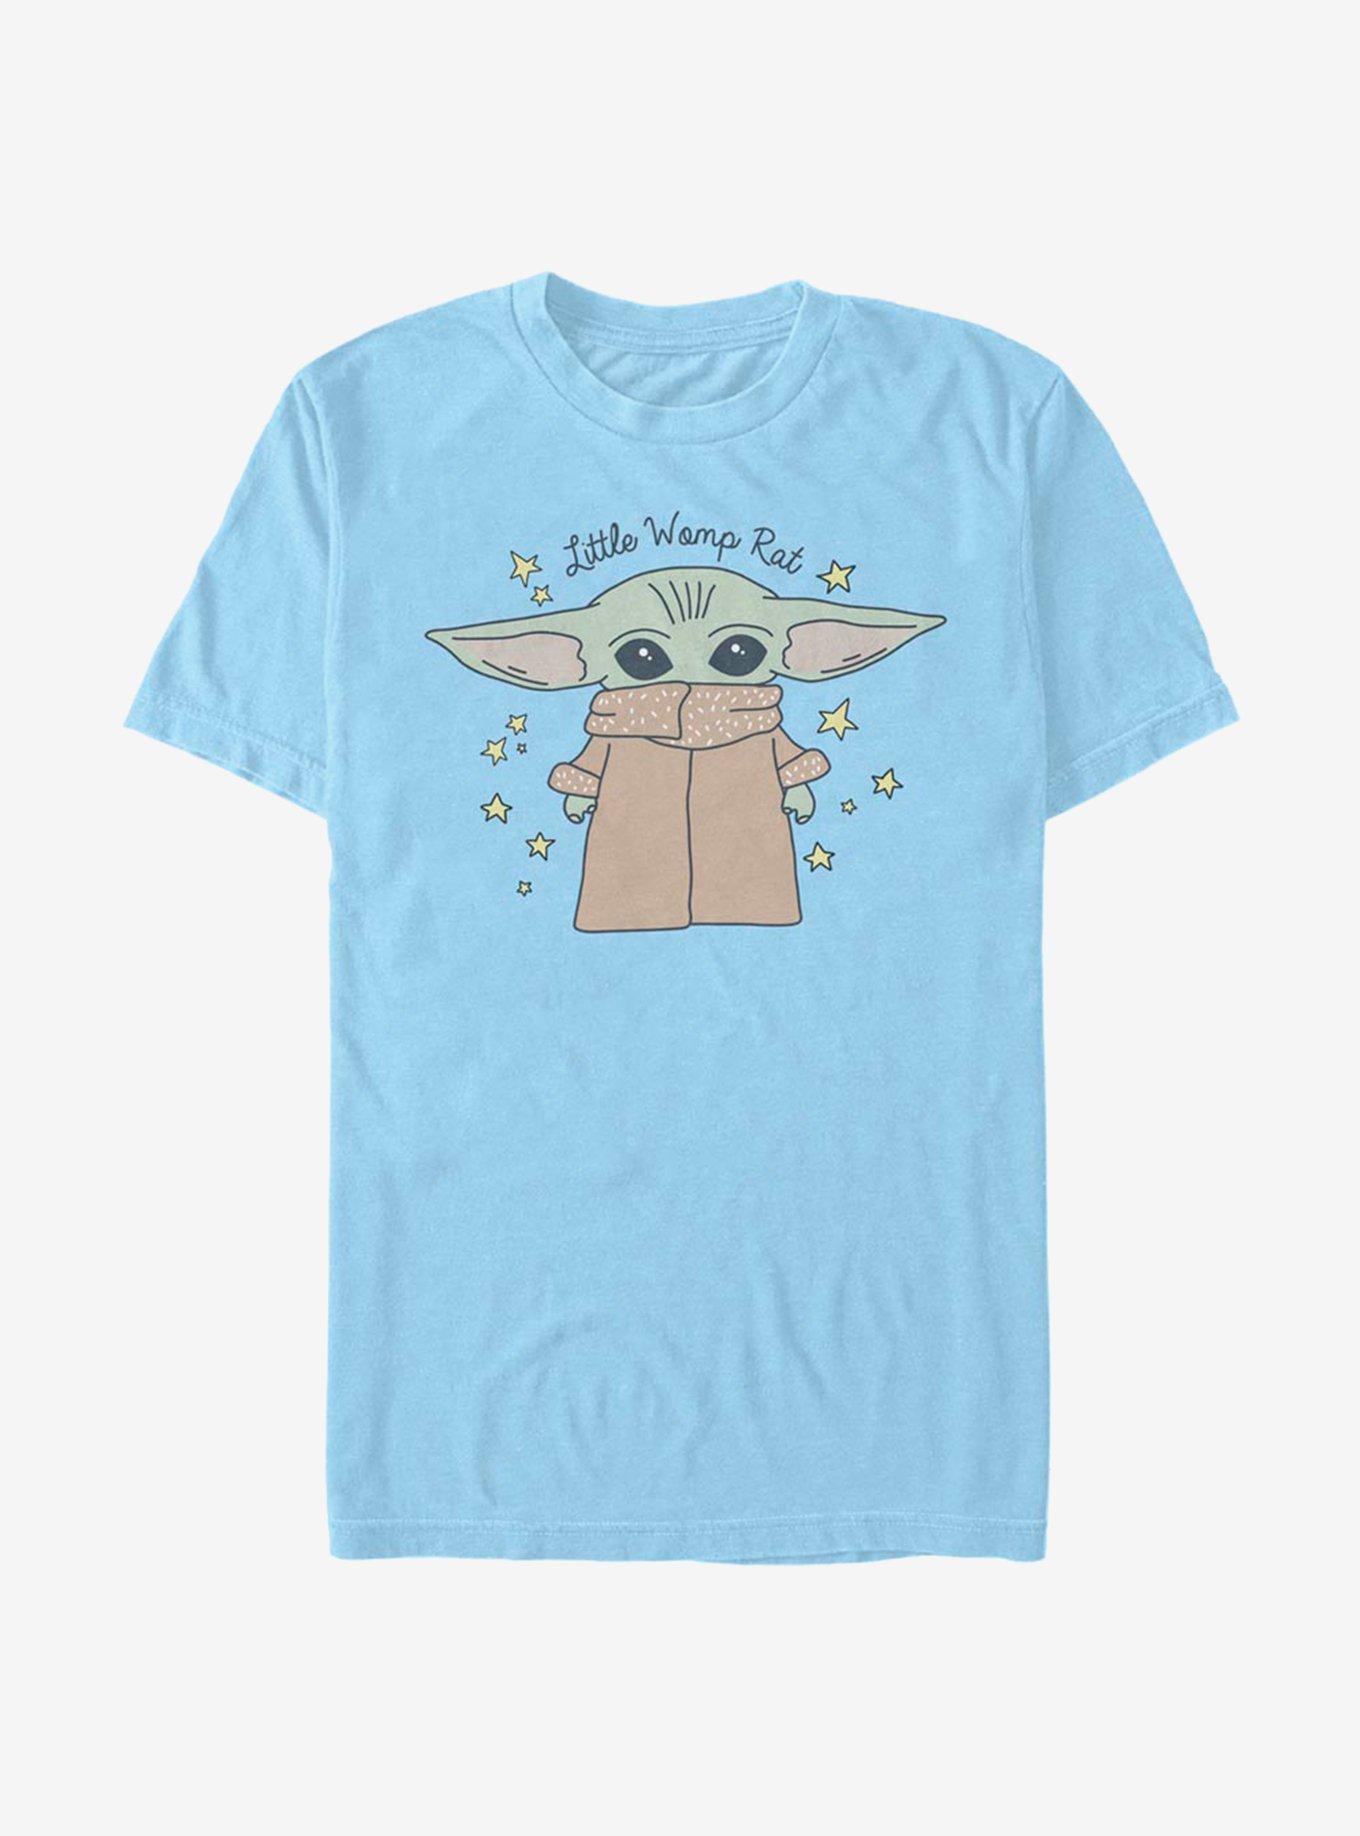 Star Wars The Mandalorian The Child Womp Rat T-Shirt, LT BLUE, hi-res